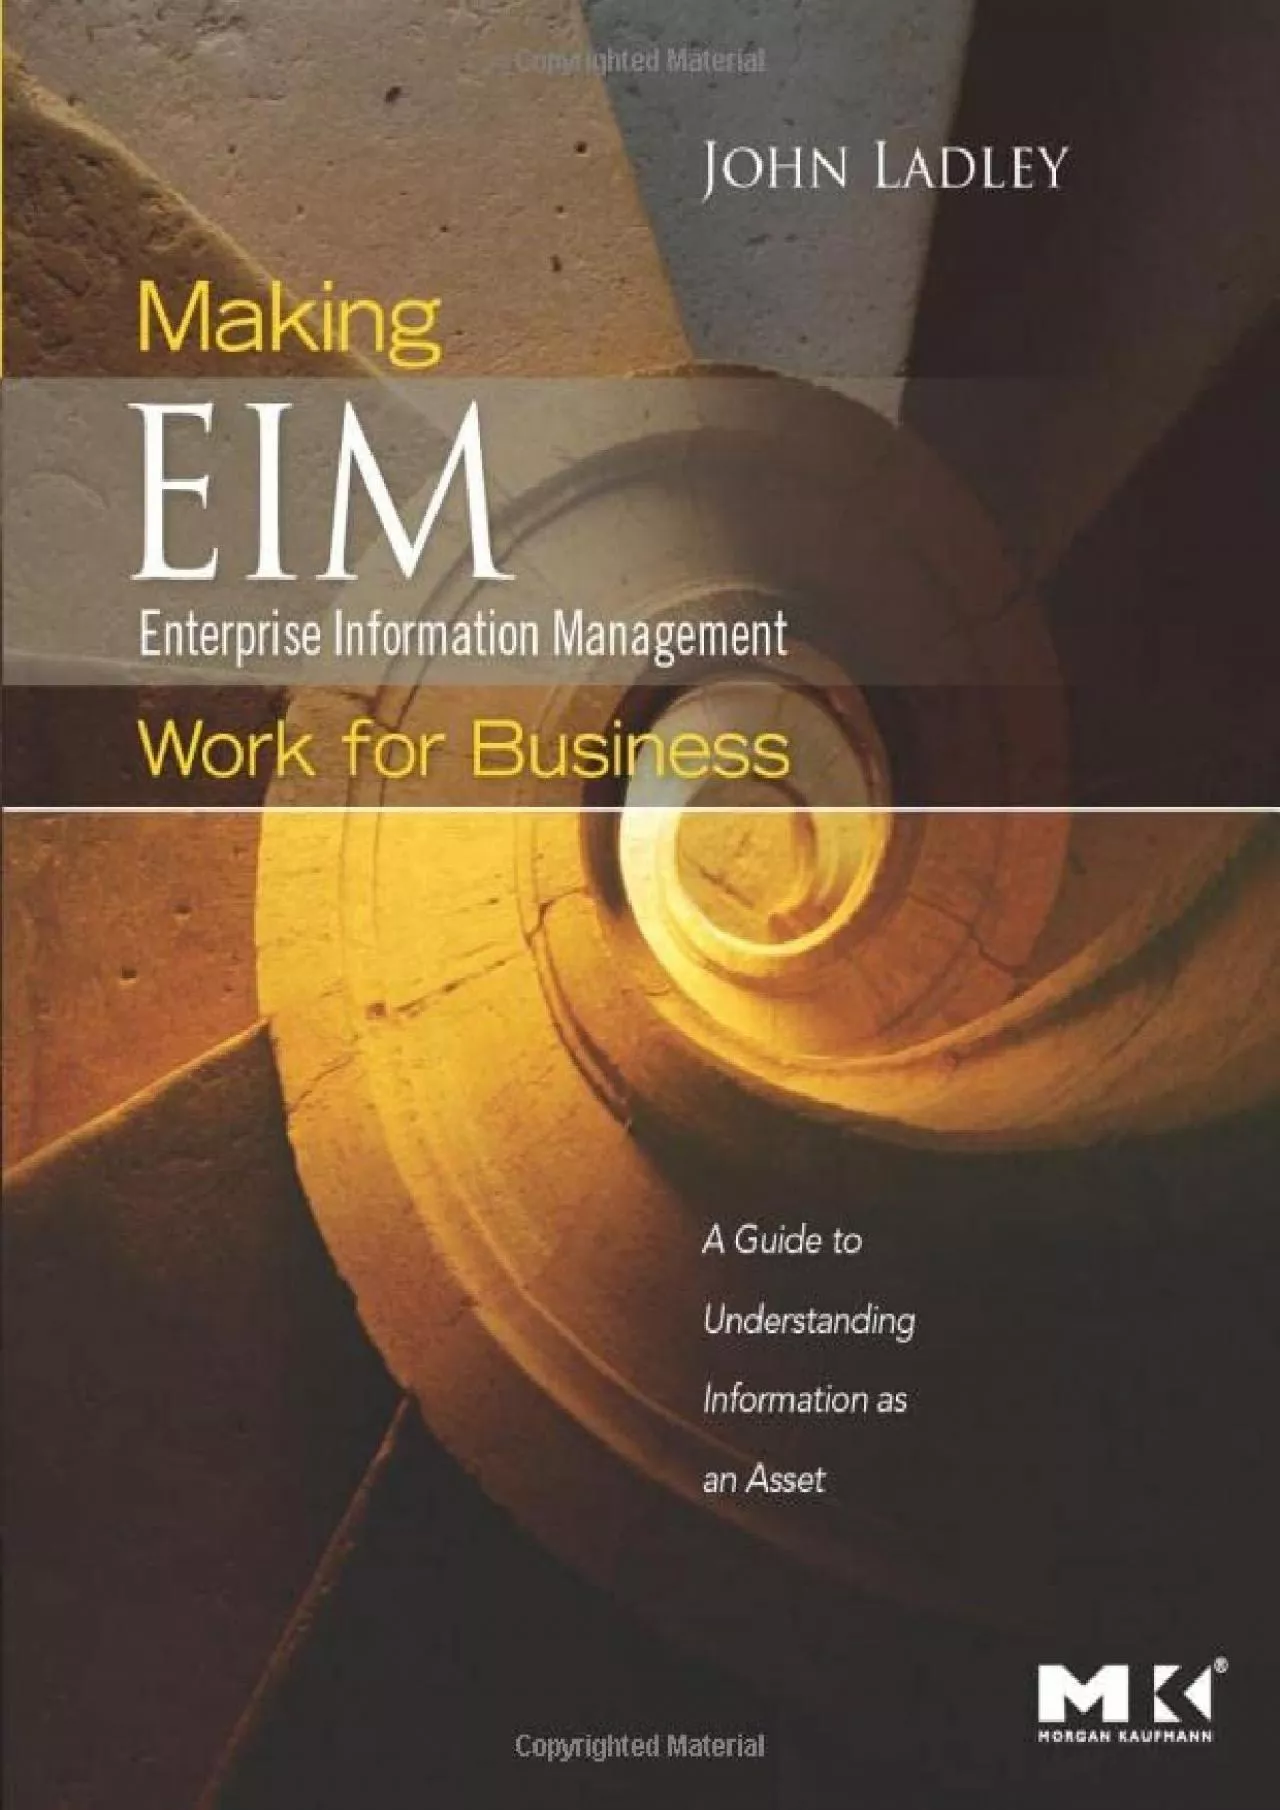 Making Enterprise Information Management (EIM) Work for Business: A Guide to Understanding